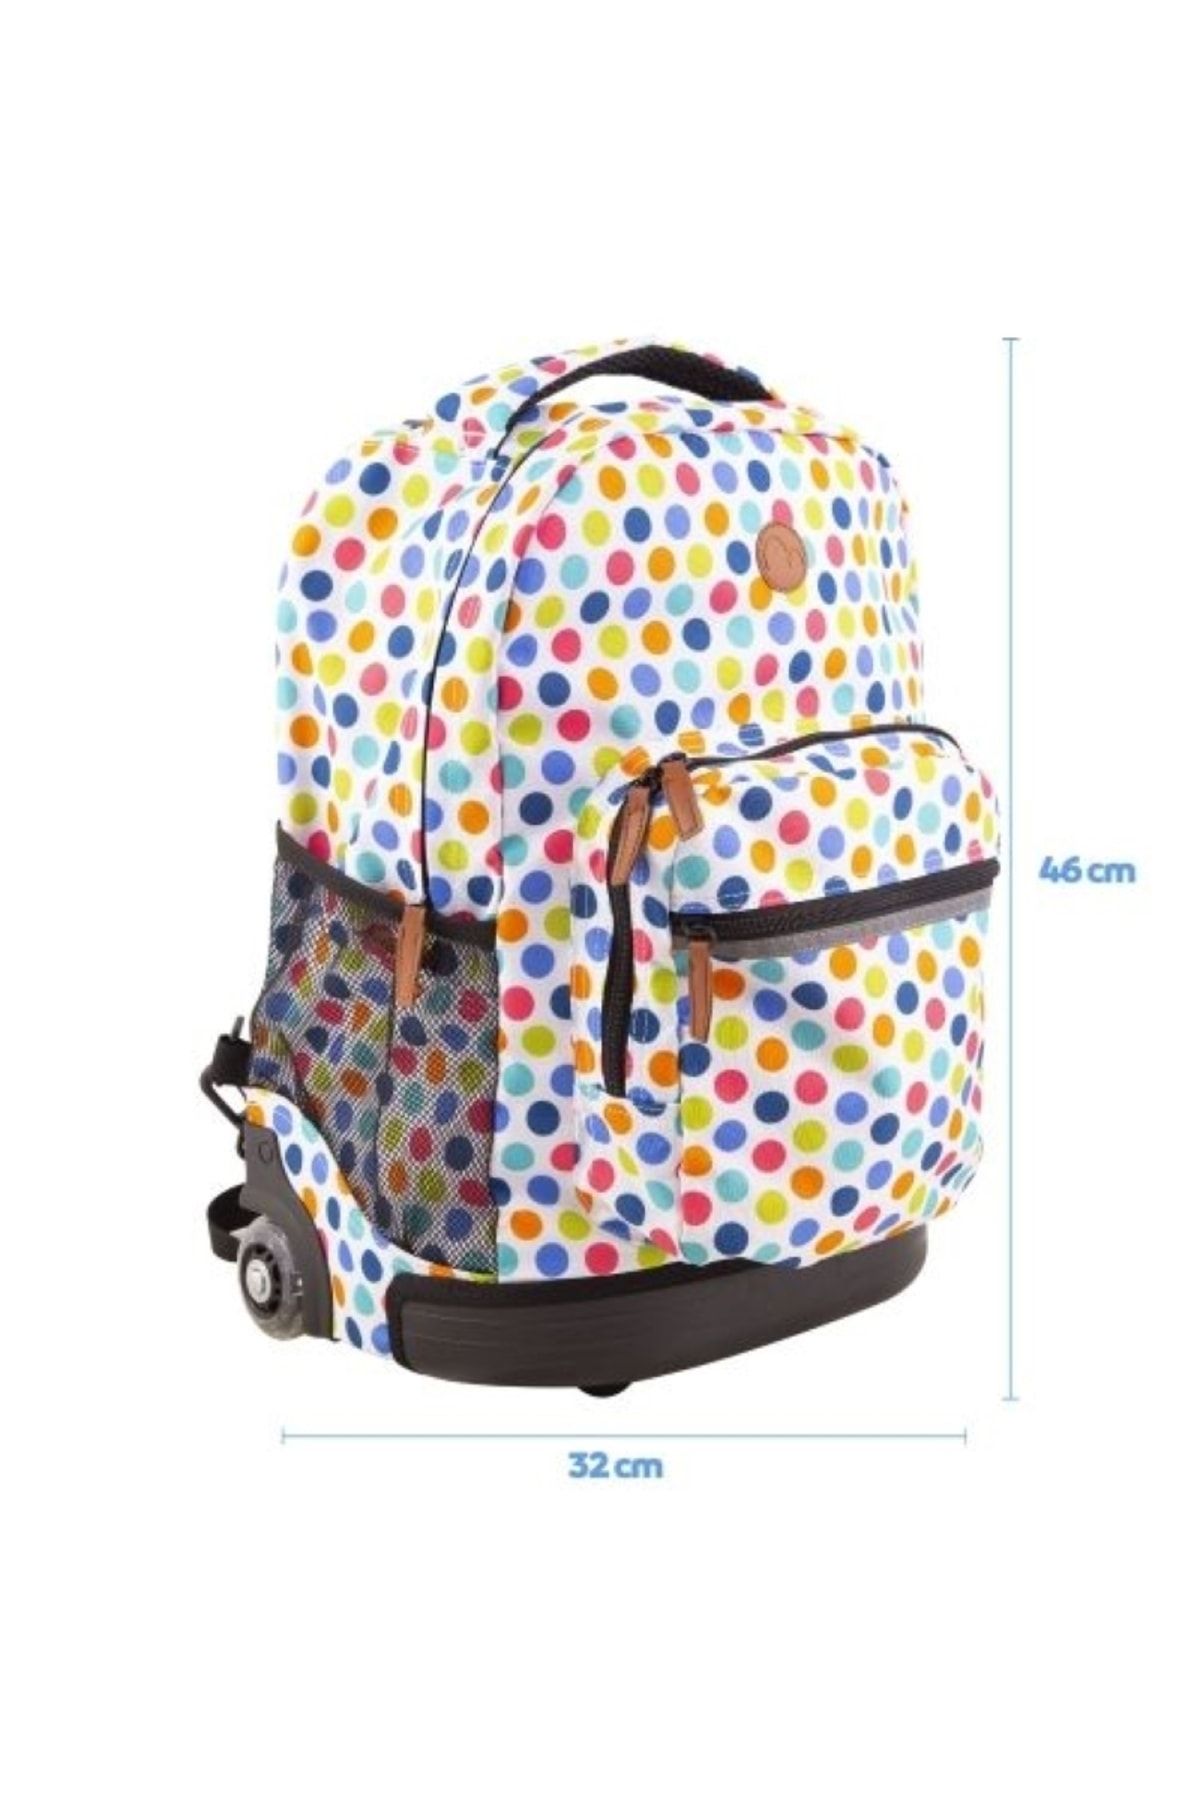 Imaginarium Backpack Trolley Pinkidoki